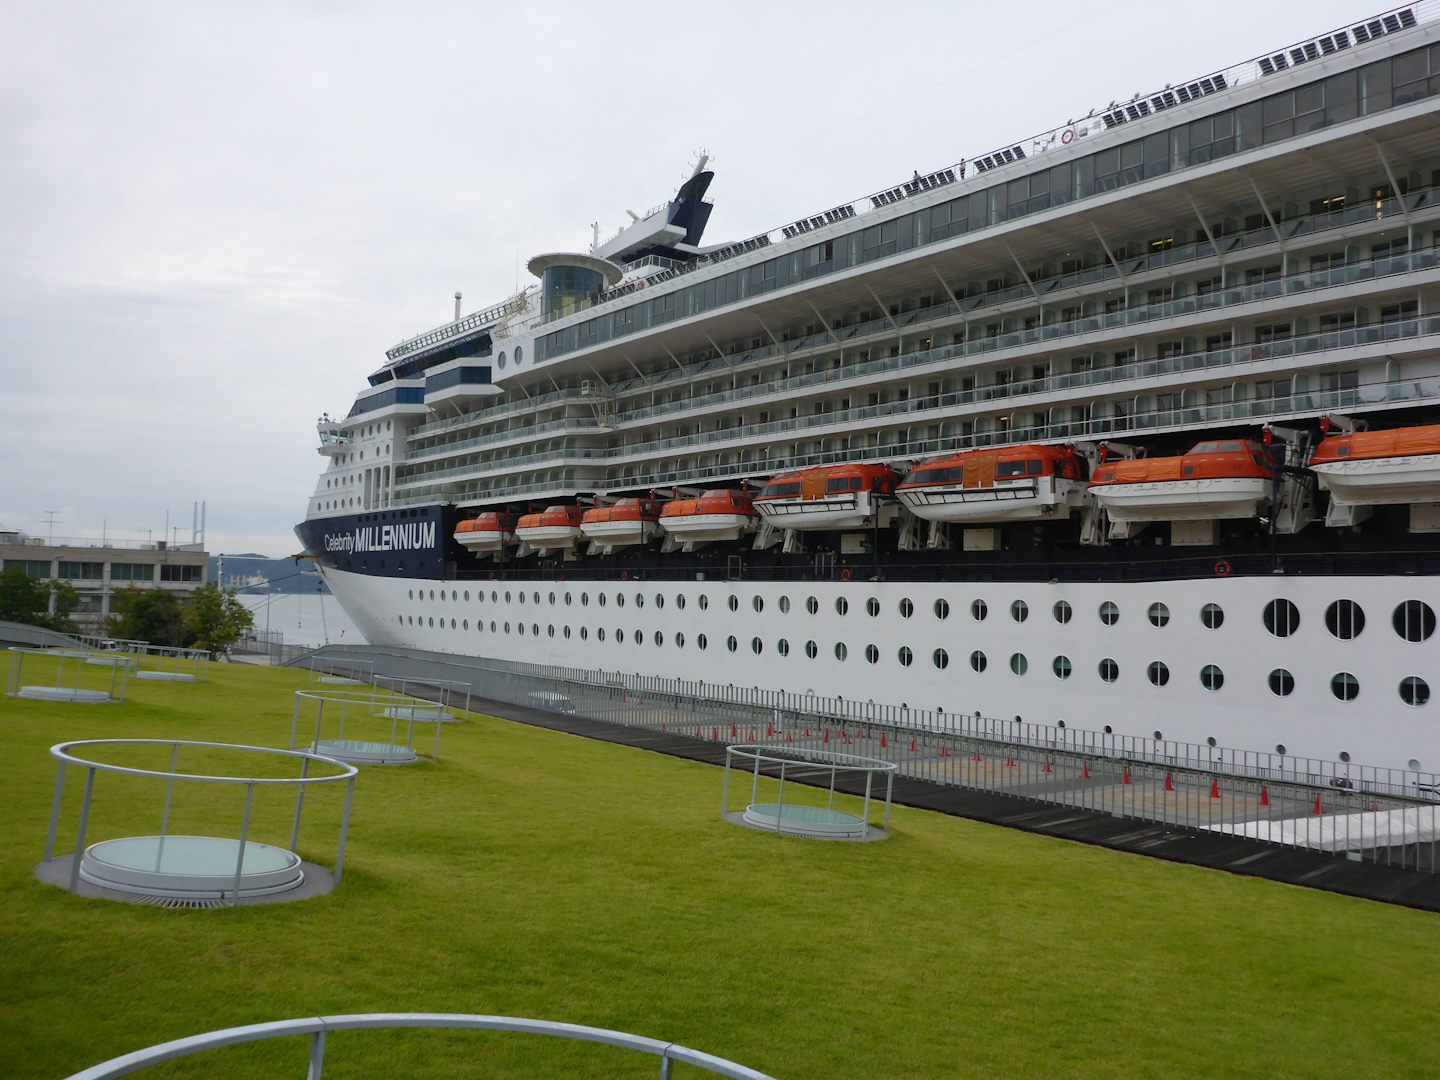 Nagasaki - Celebrity Millennium docked at port